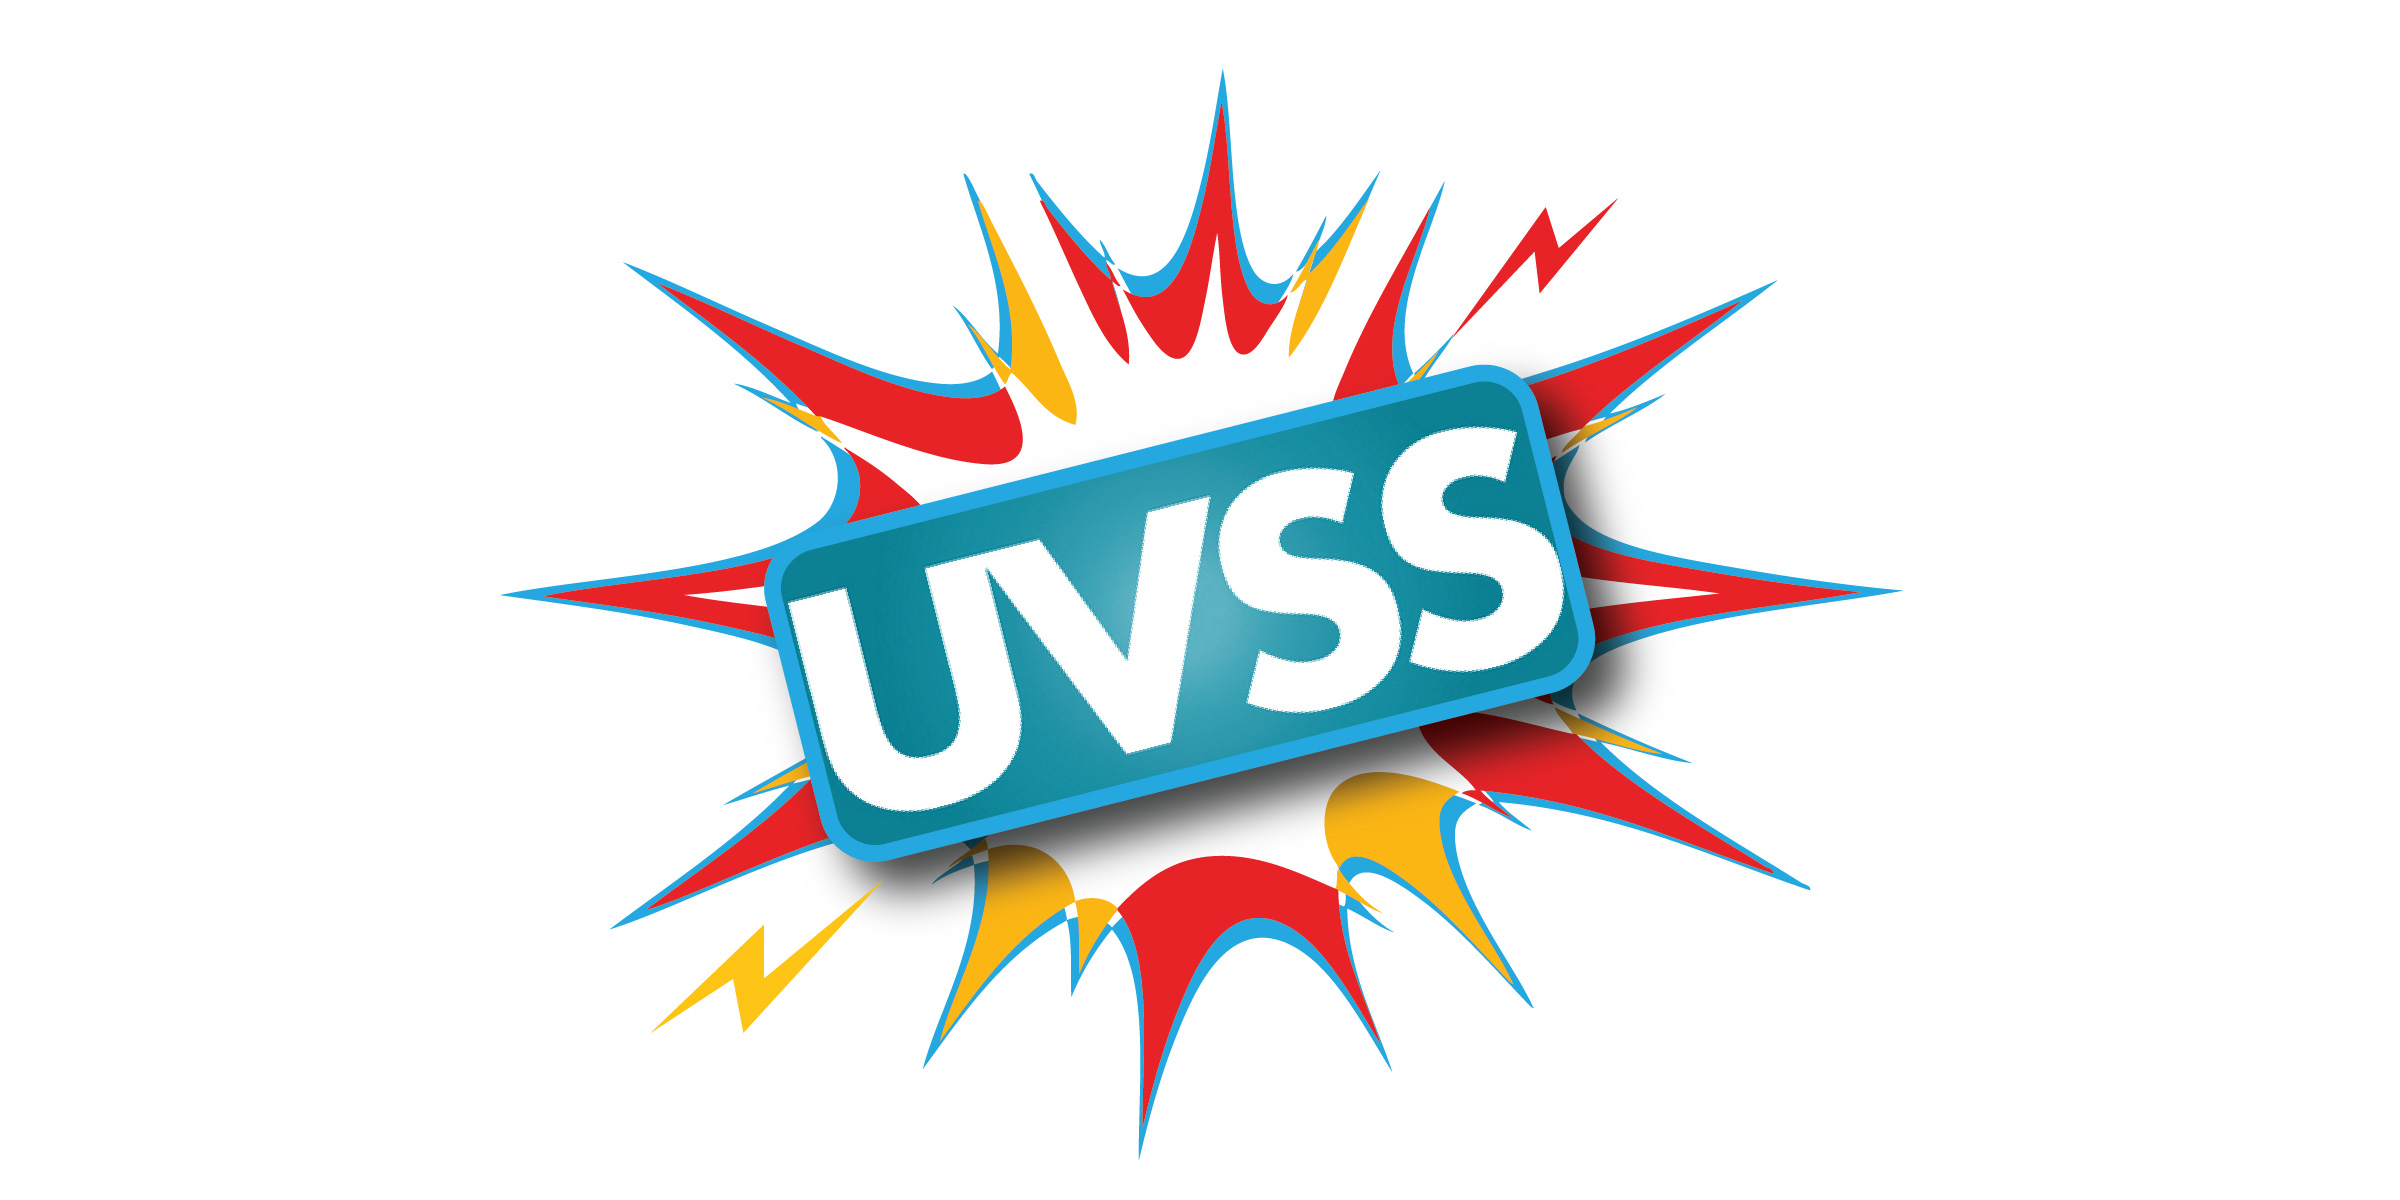 UVSS meets quorum, passes bylaw changes at SAGM